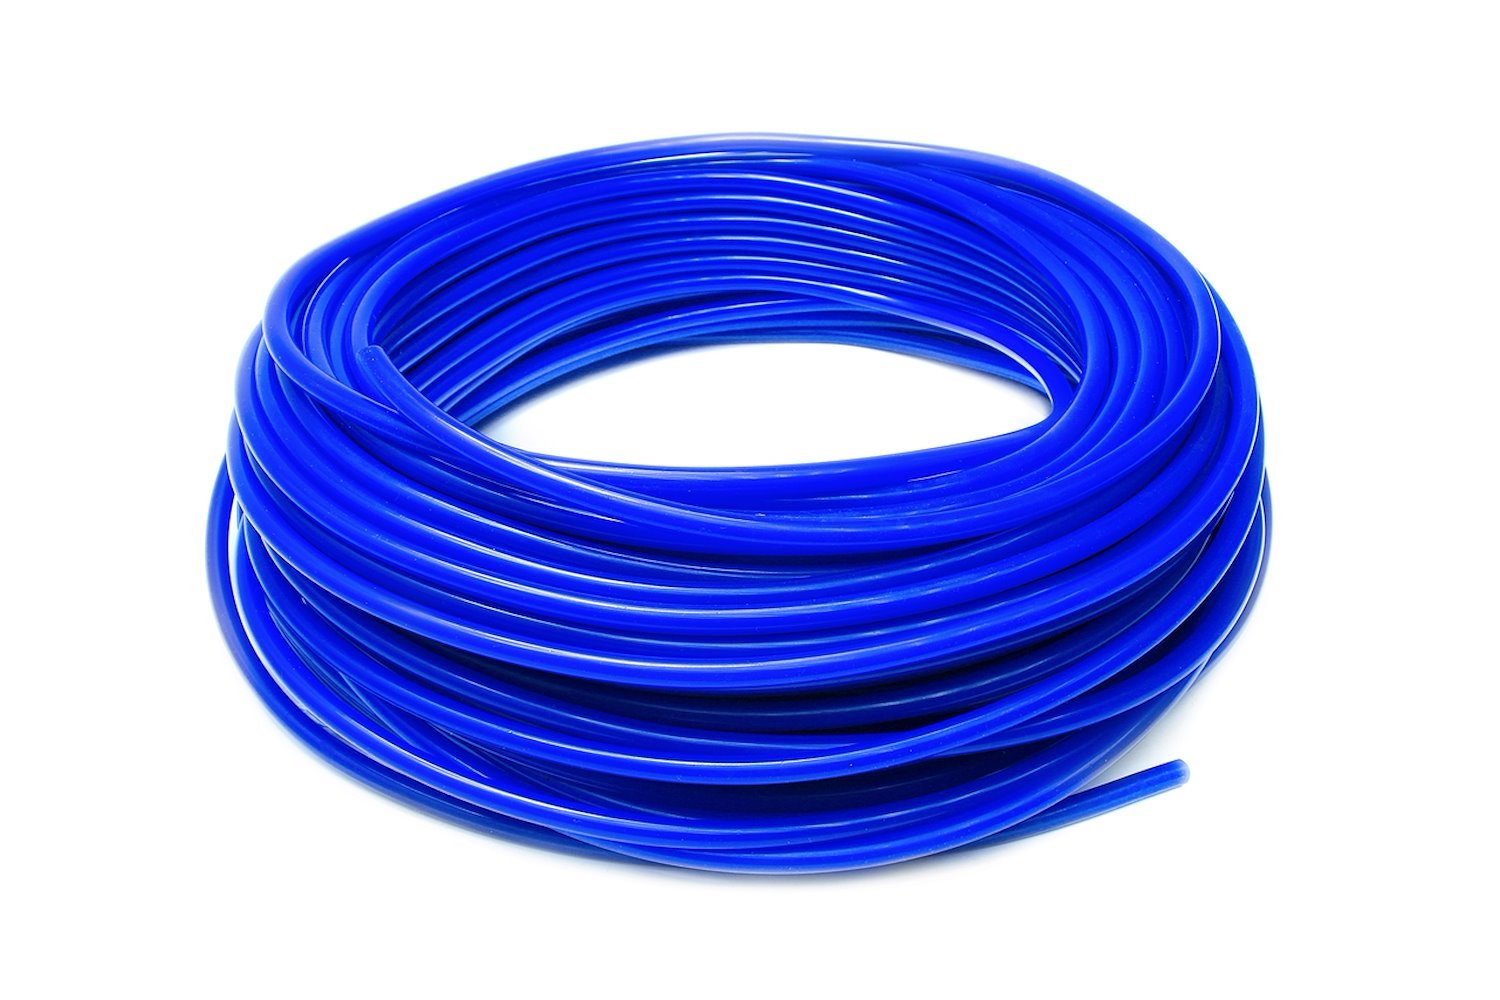 HTSVH4-BLUEx100 High-Temperature Silicone Vacuum Hose Tubing, 5/32 in. ID, 100 ft. Roll, Blue